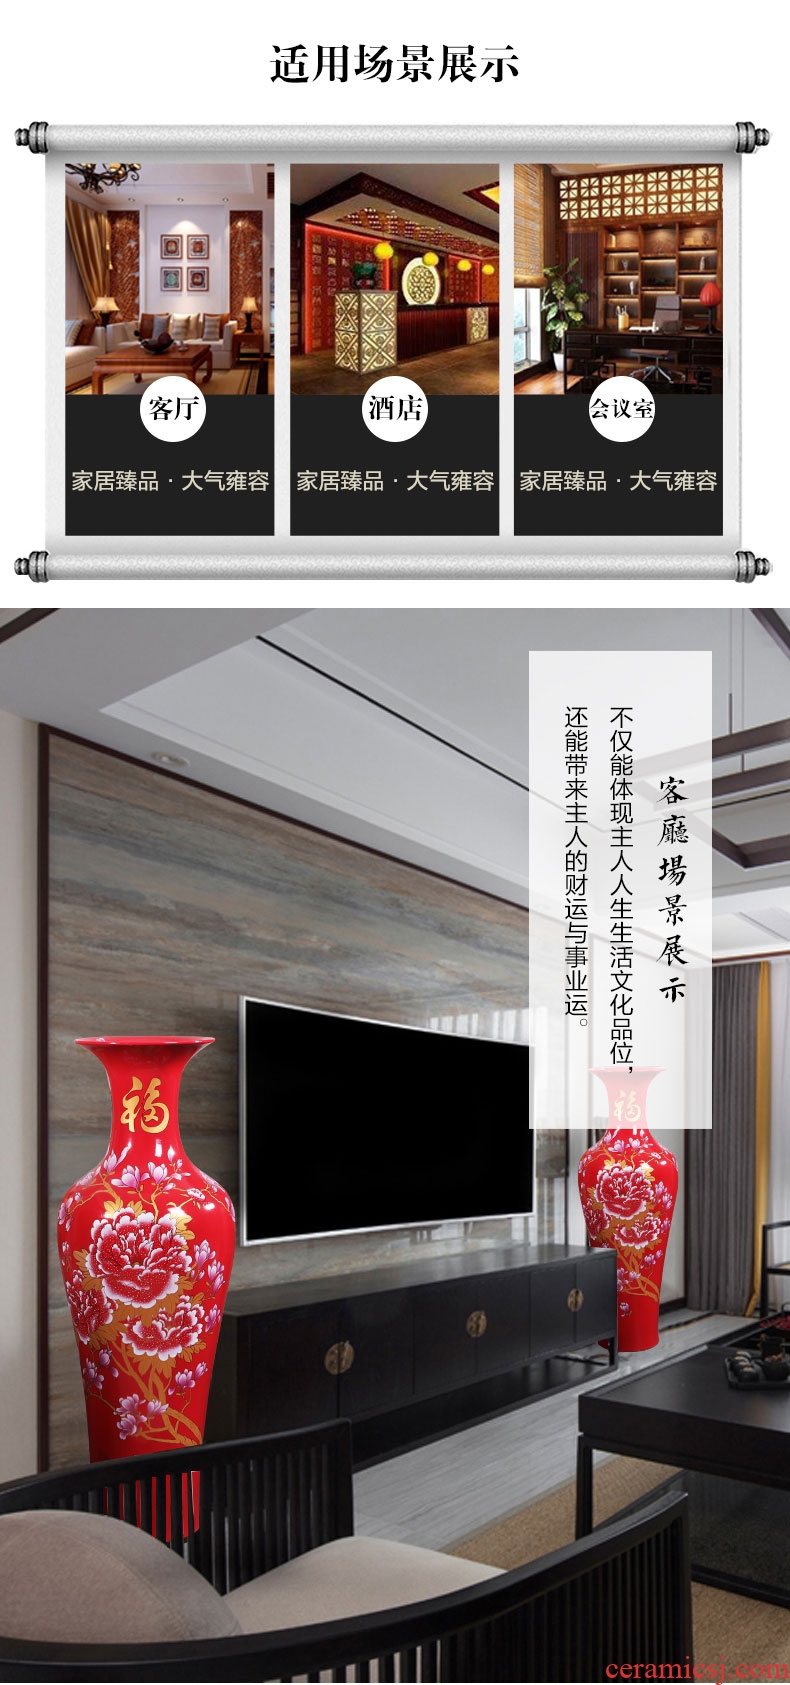 Porcelain of jingdezhen ceramics vase Chinese penjing large three - piece wine cabinet decoration plate household decoration - 599088113020